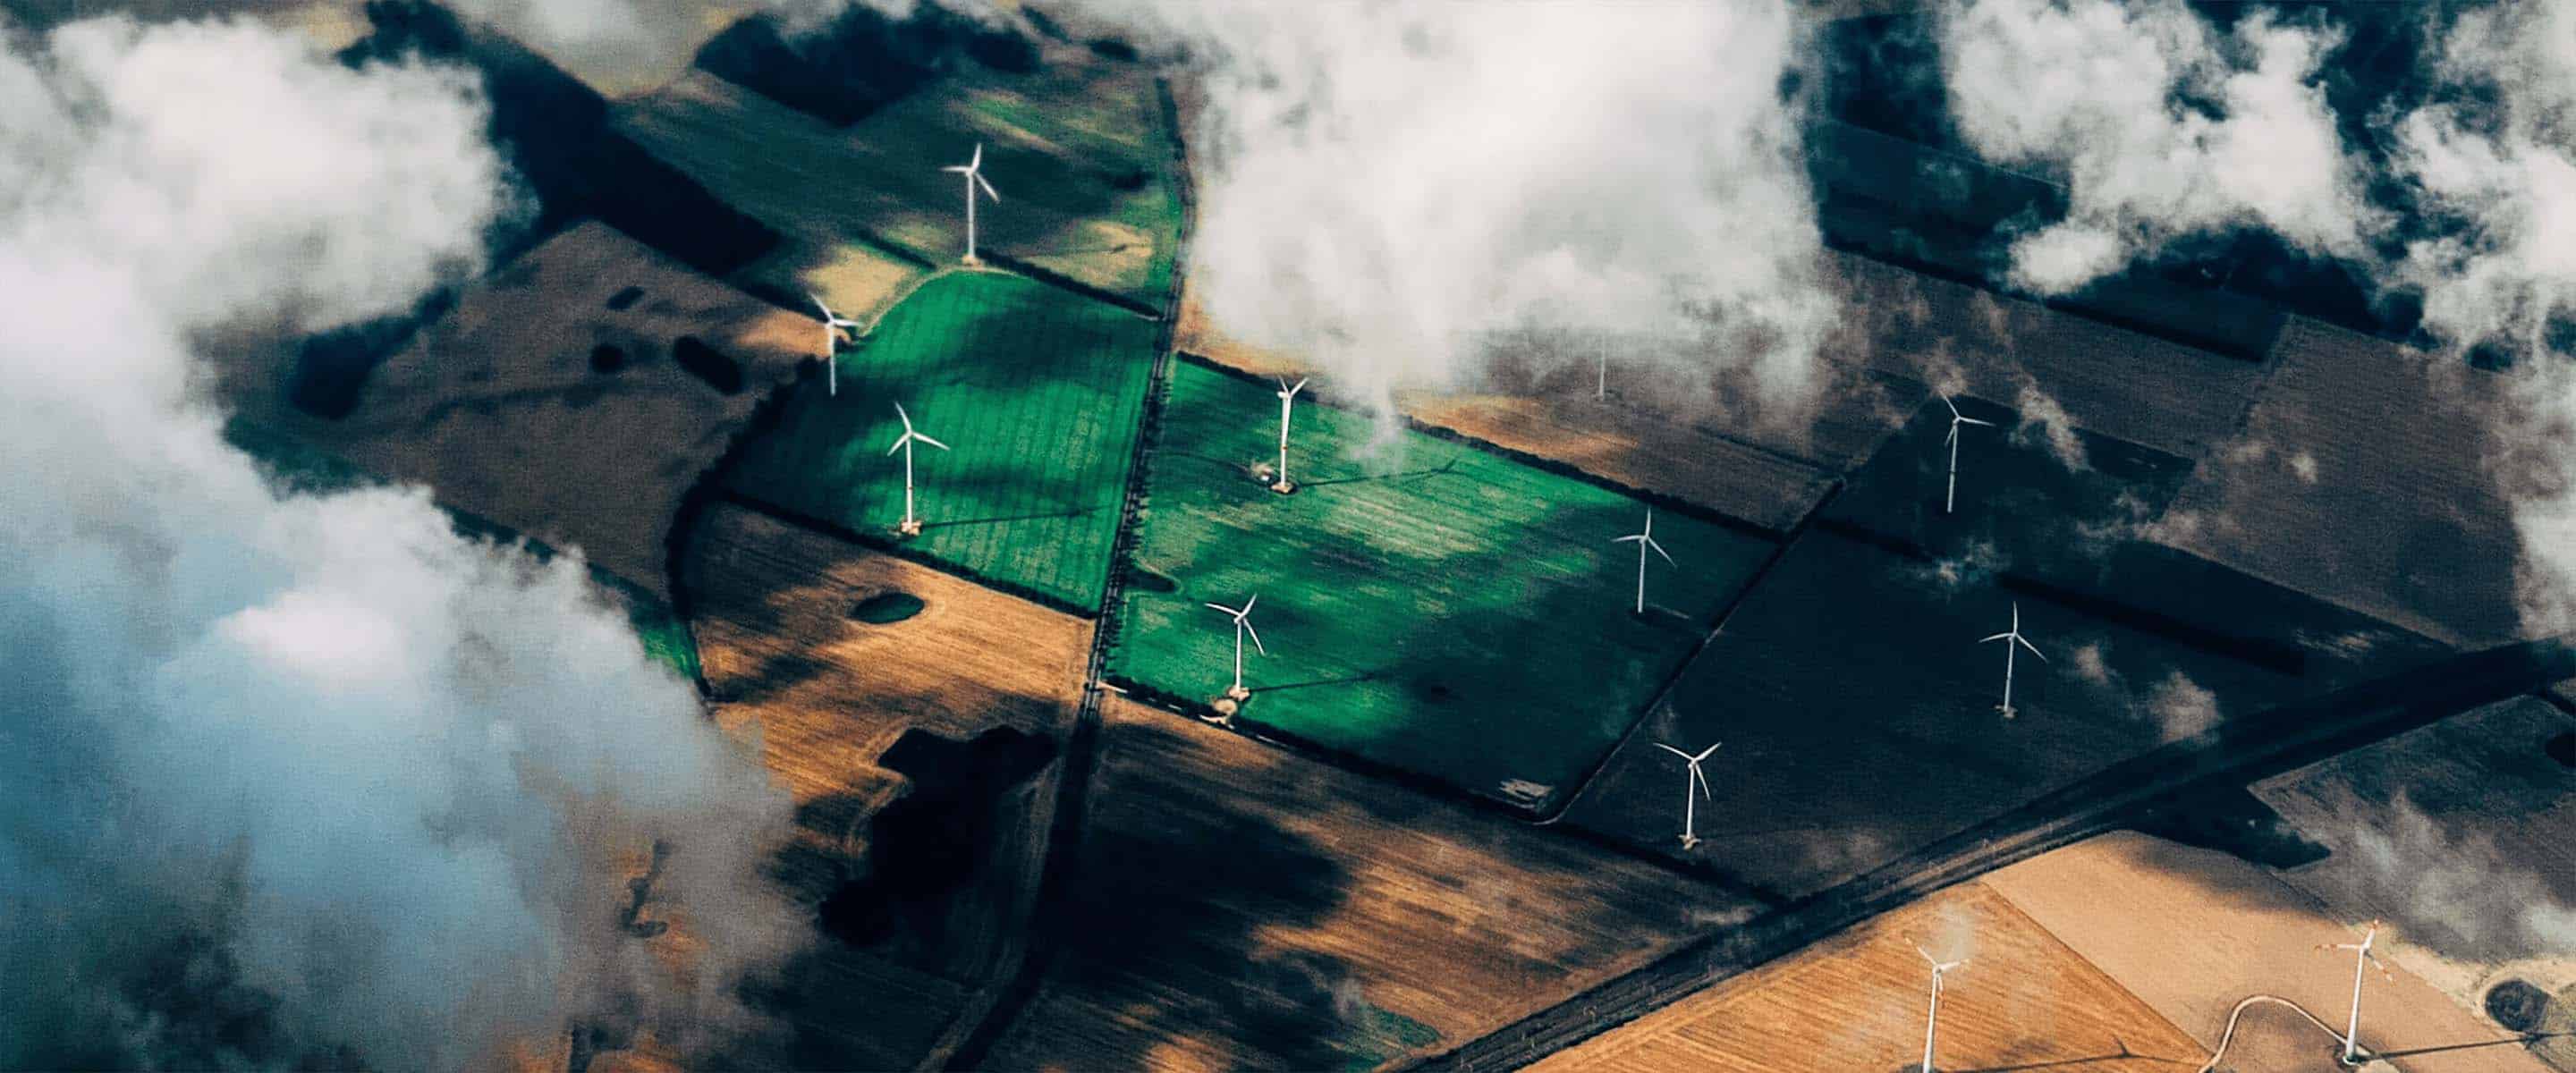 A cloudy aerial view of wind turbines on farmland.